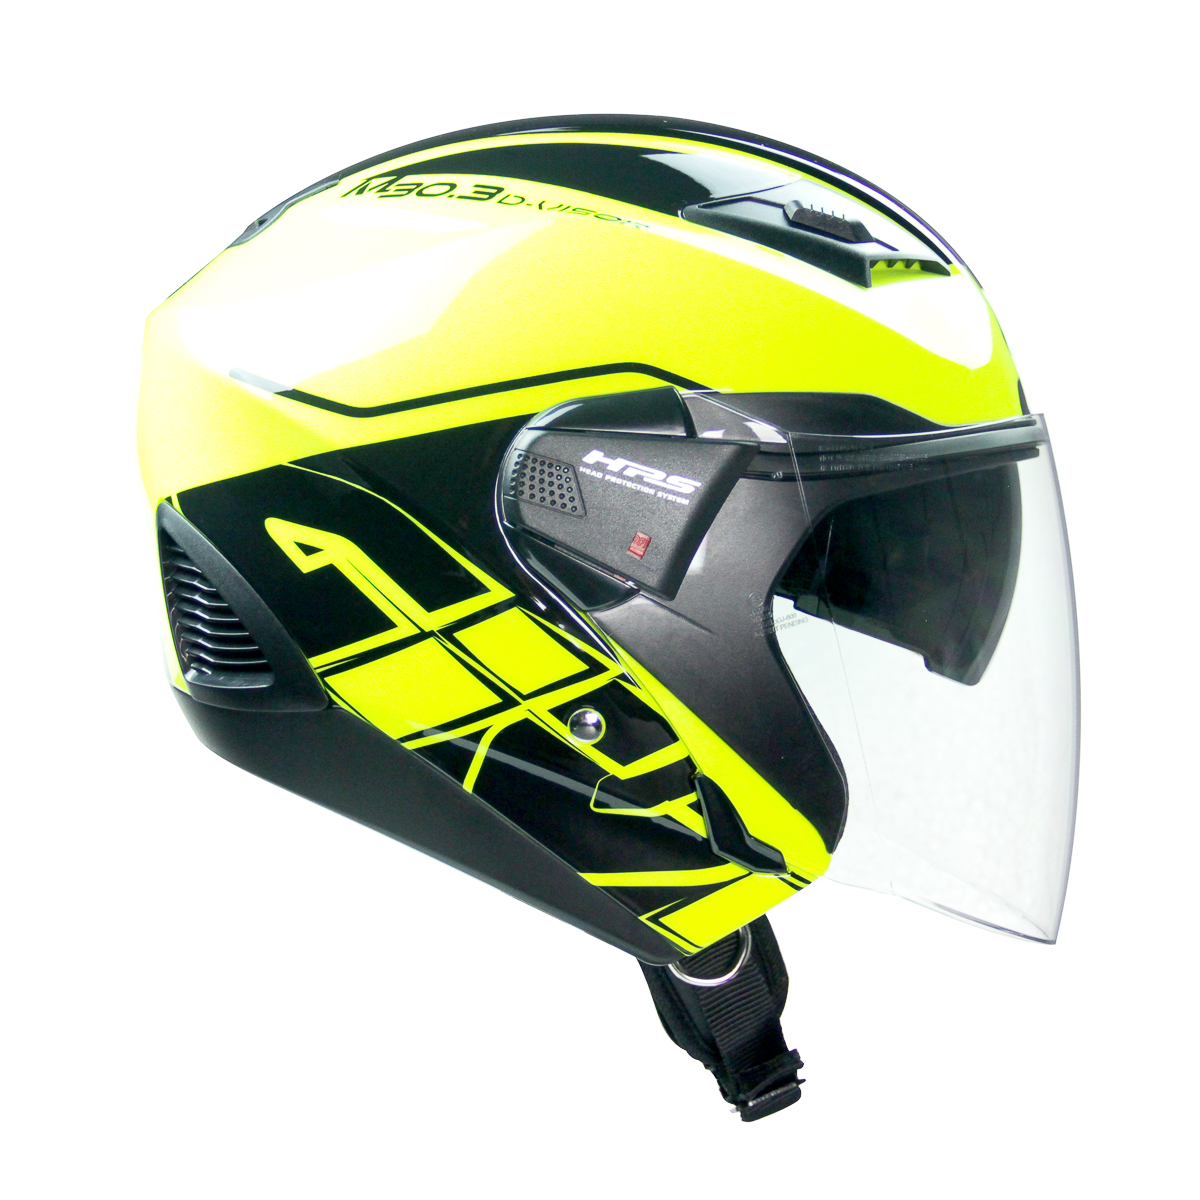 givi-m30-d-visor-jet-helmet-price-malaysia-4 - BikesRepublic